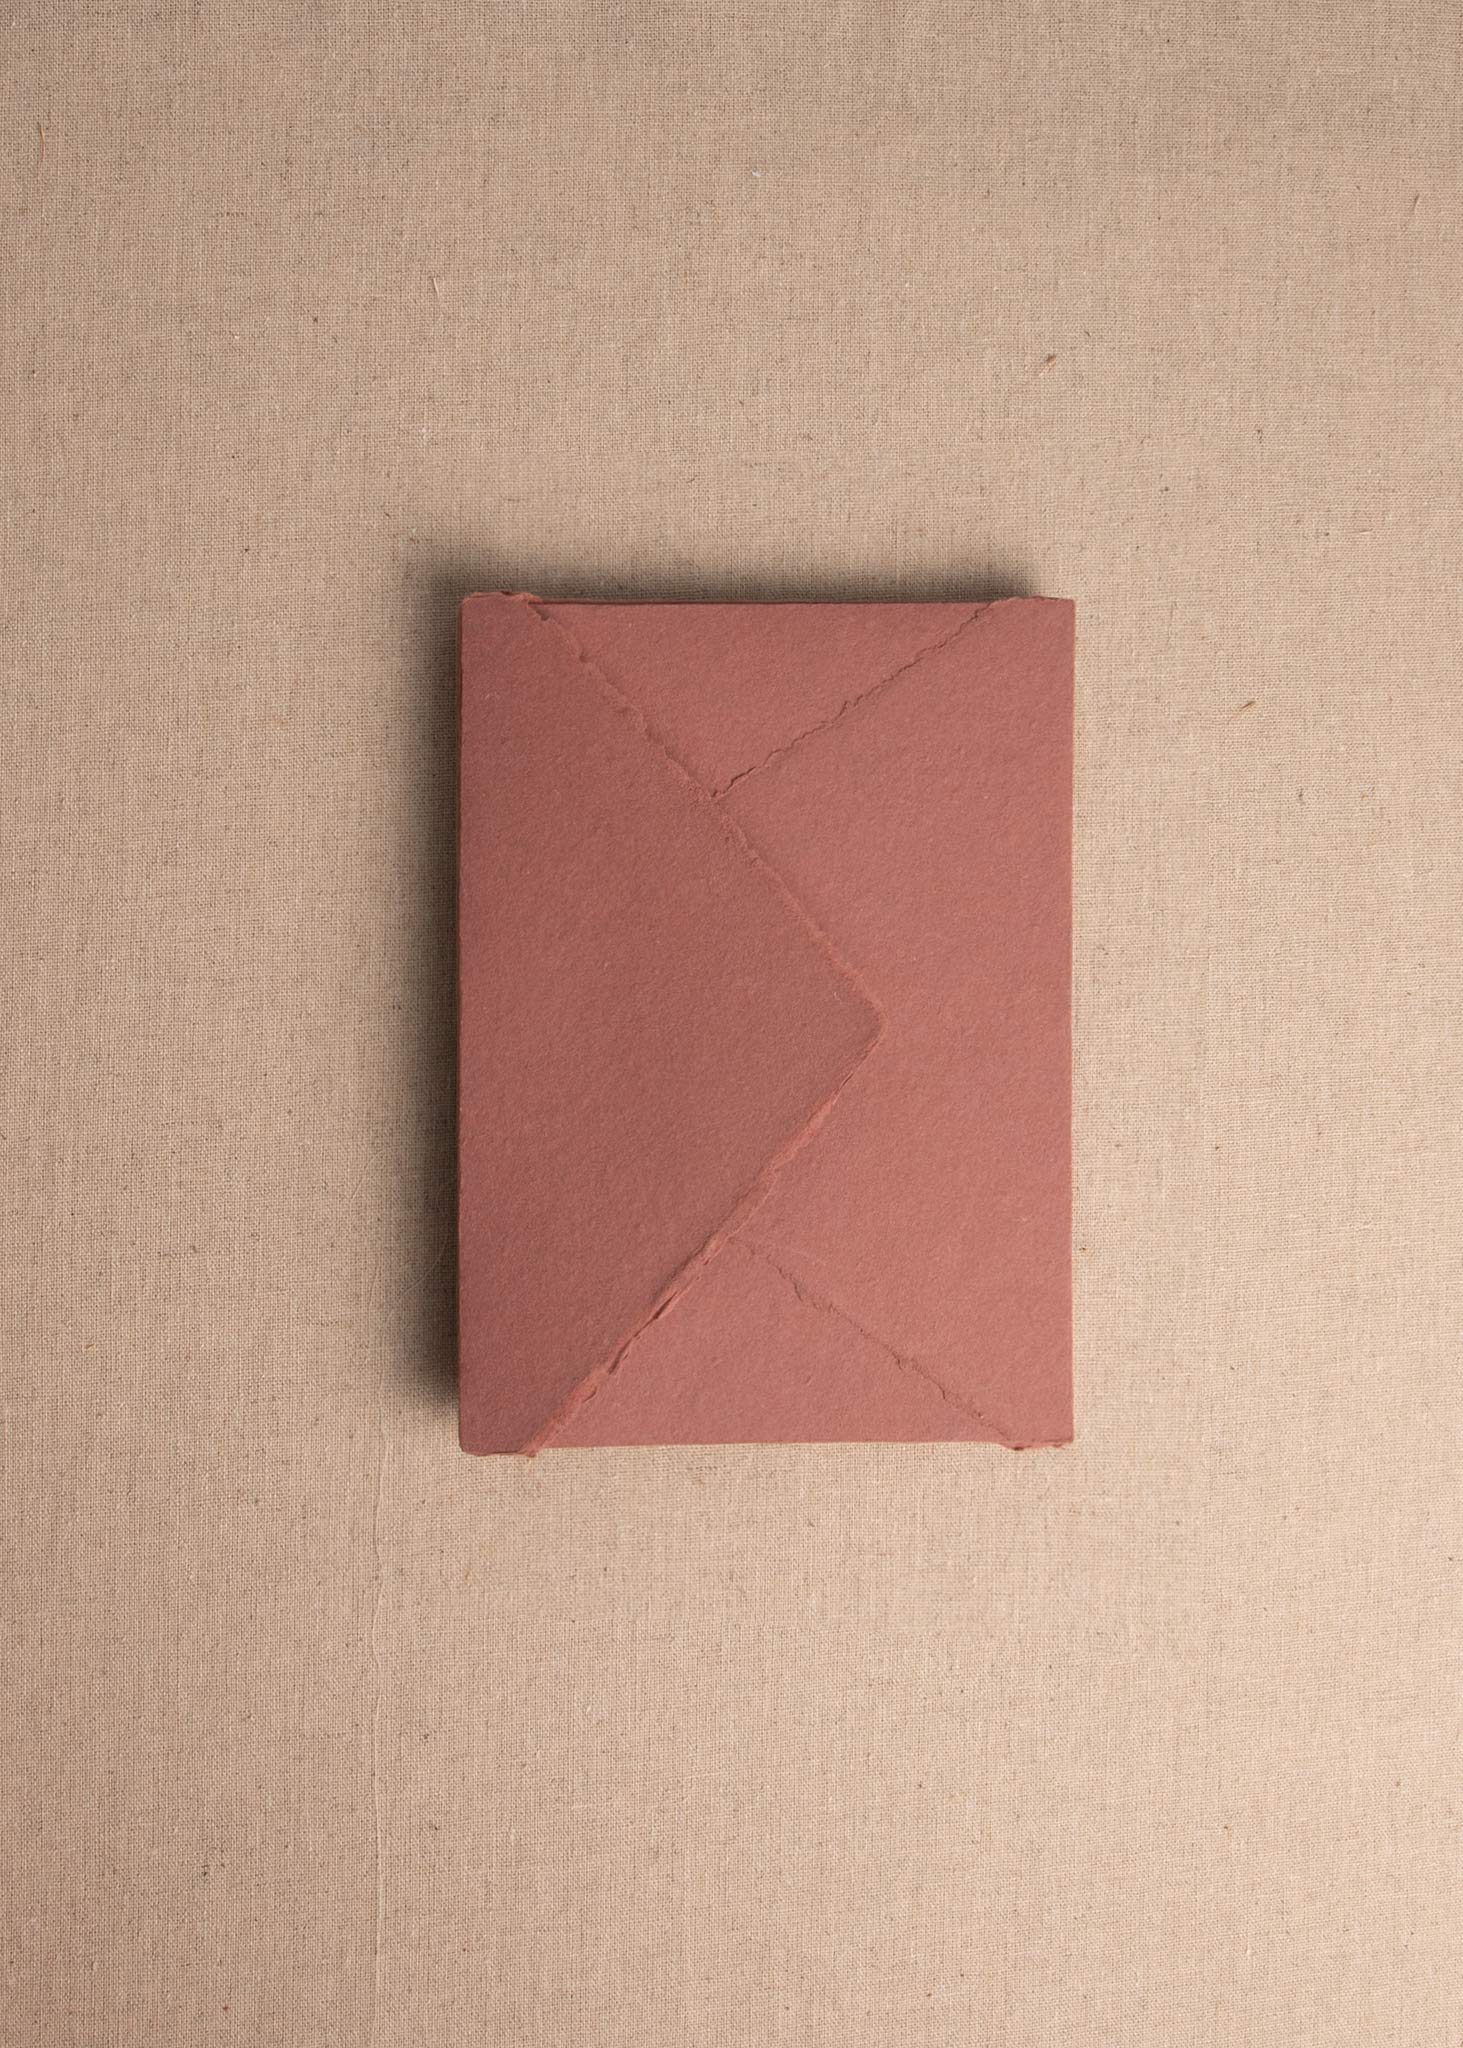 Singular 5x7 Rose Handmade paper envelope with deckle edge on linen background